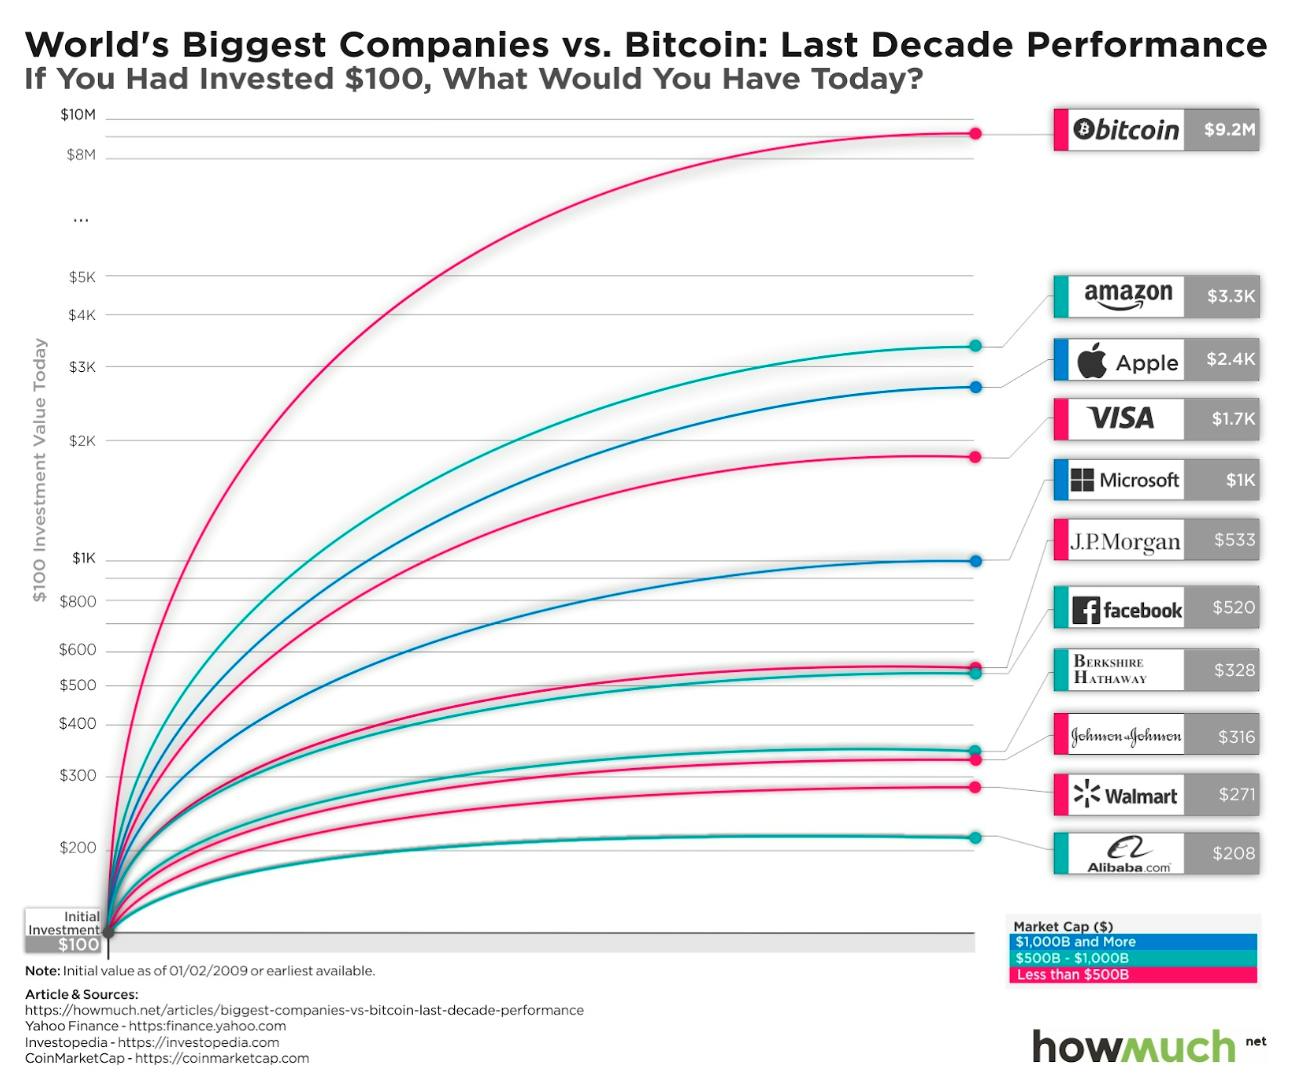 World's biggest companies vs Bitcoin